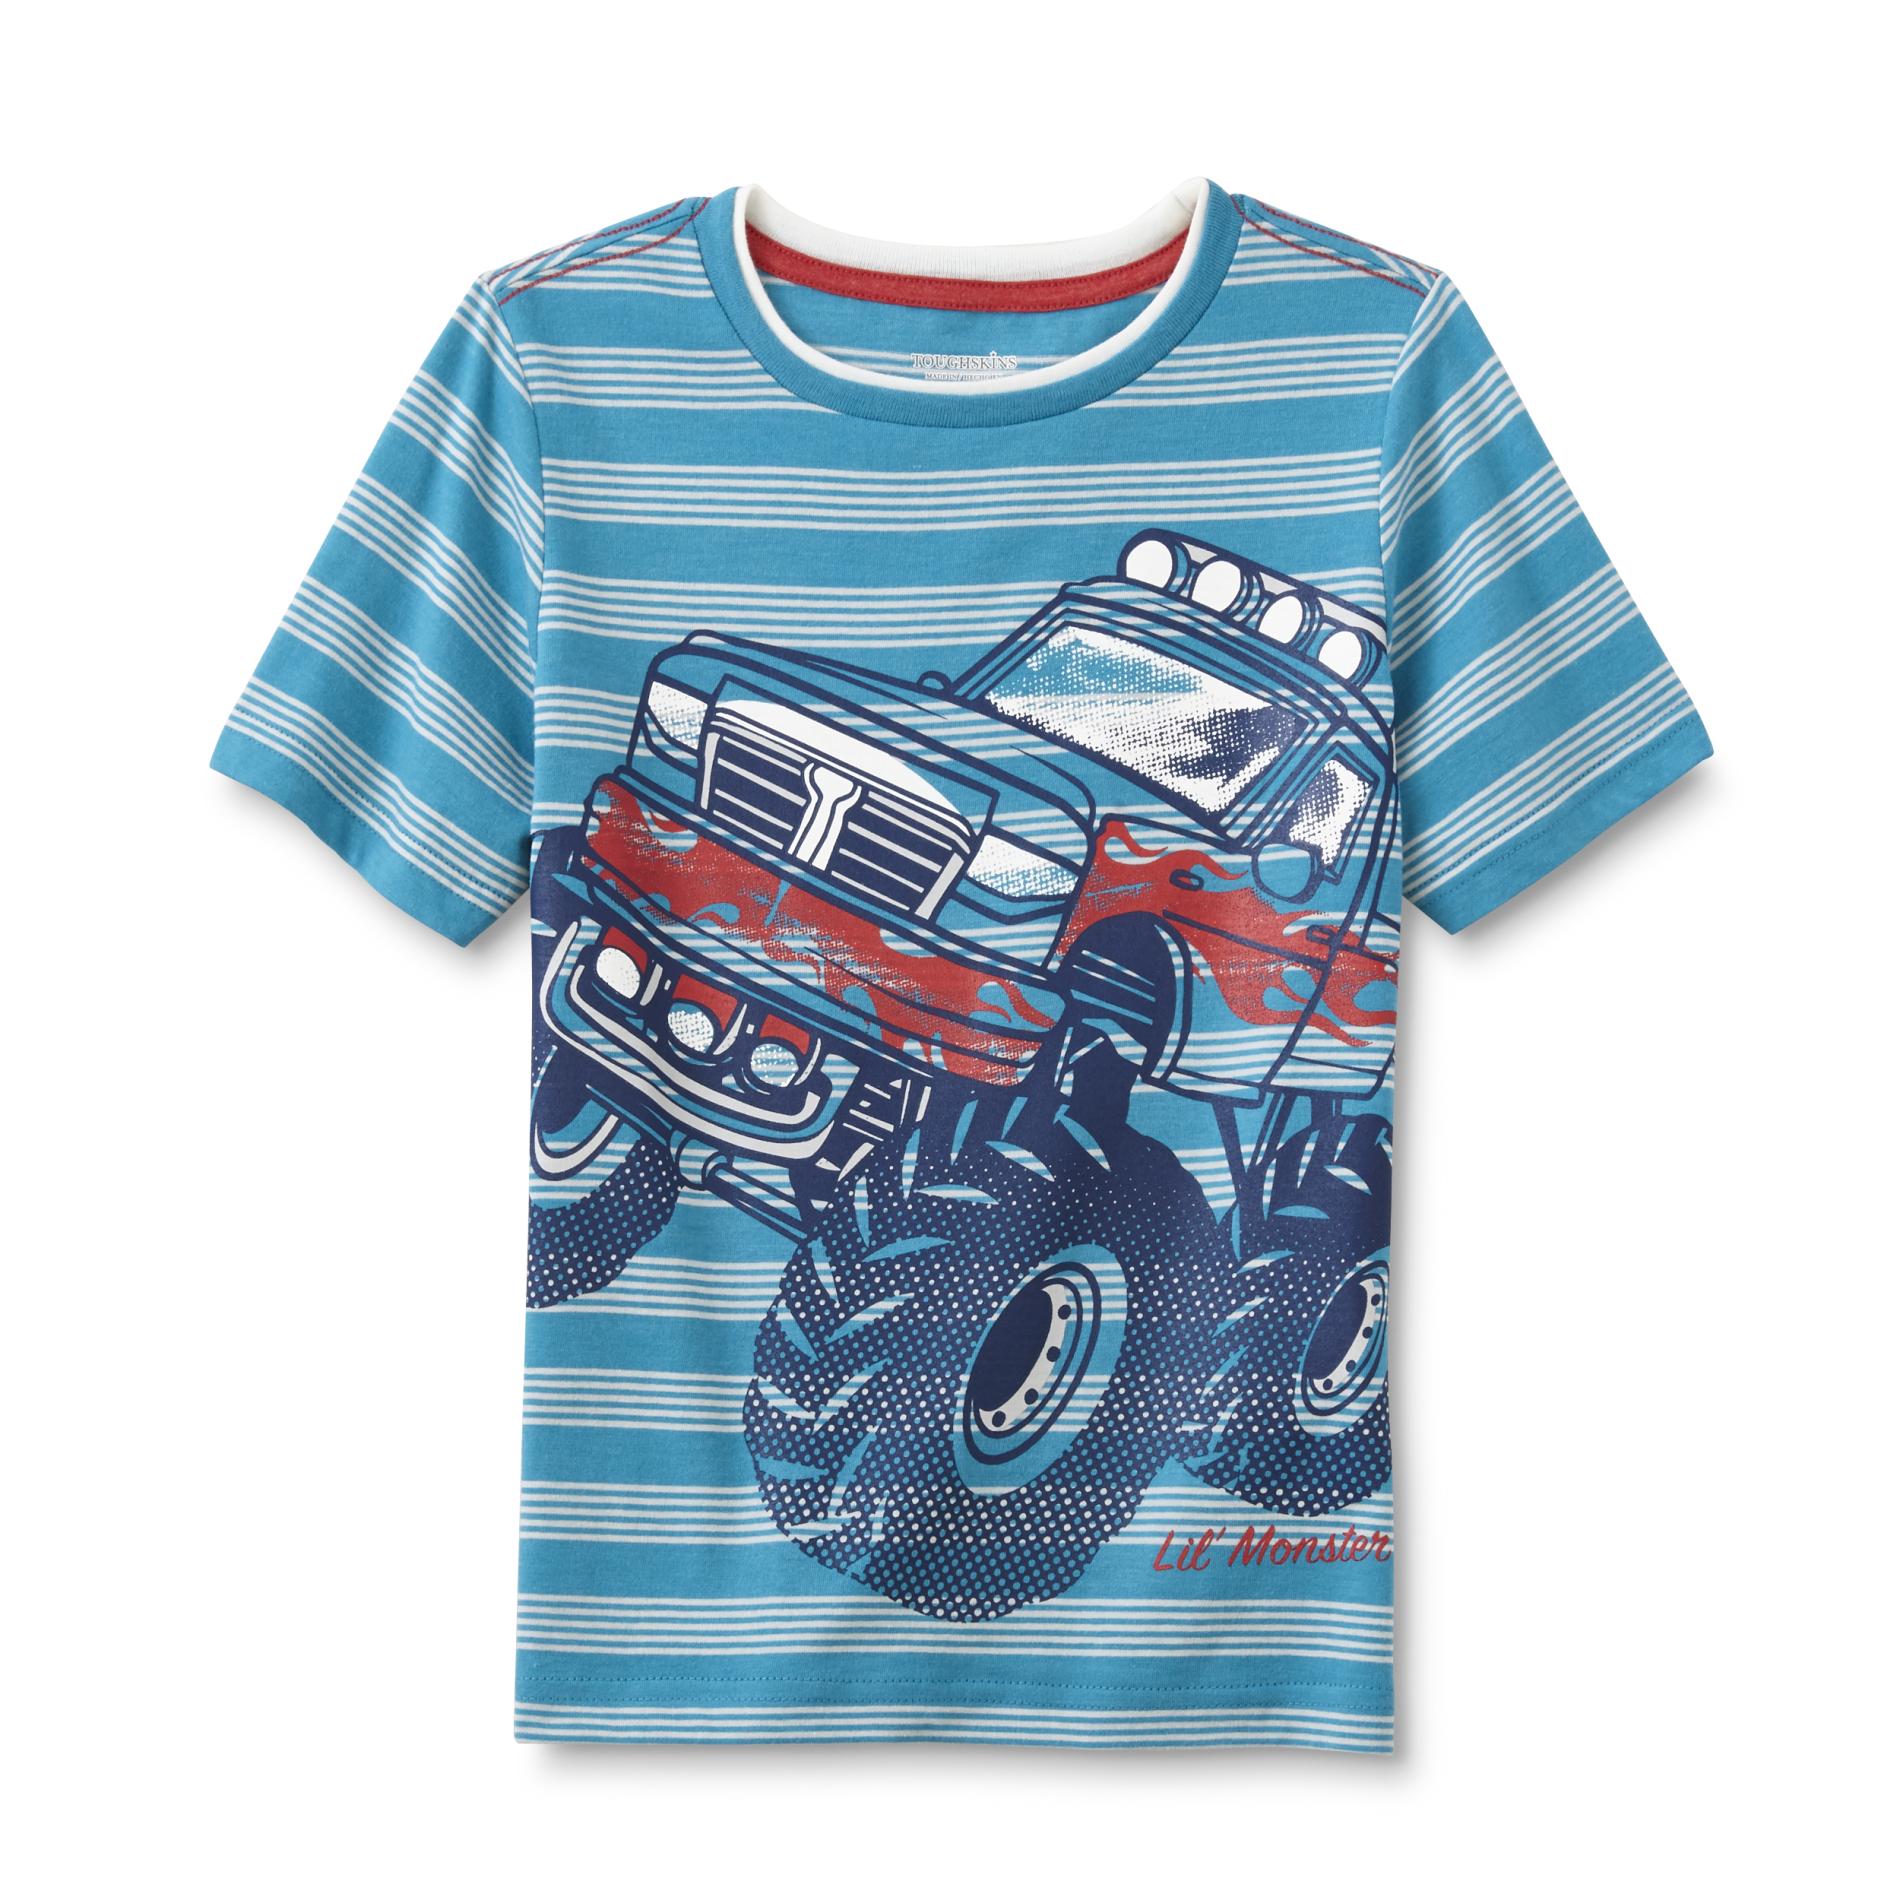 Toughskins Infant & Toddler Boy's Graphic T-Shirt - Monster Truck